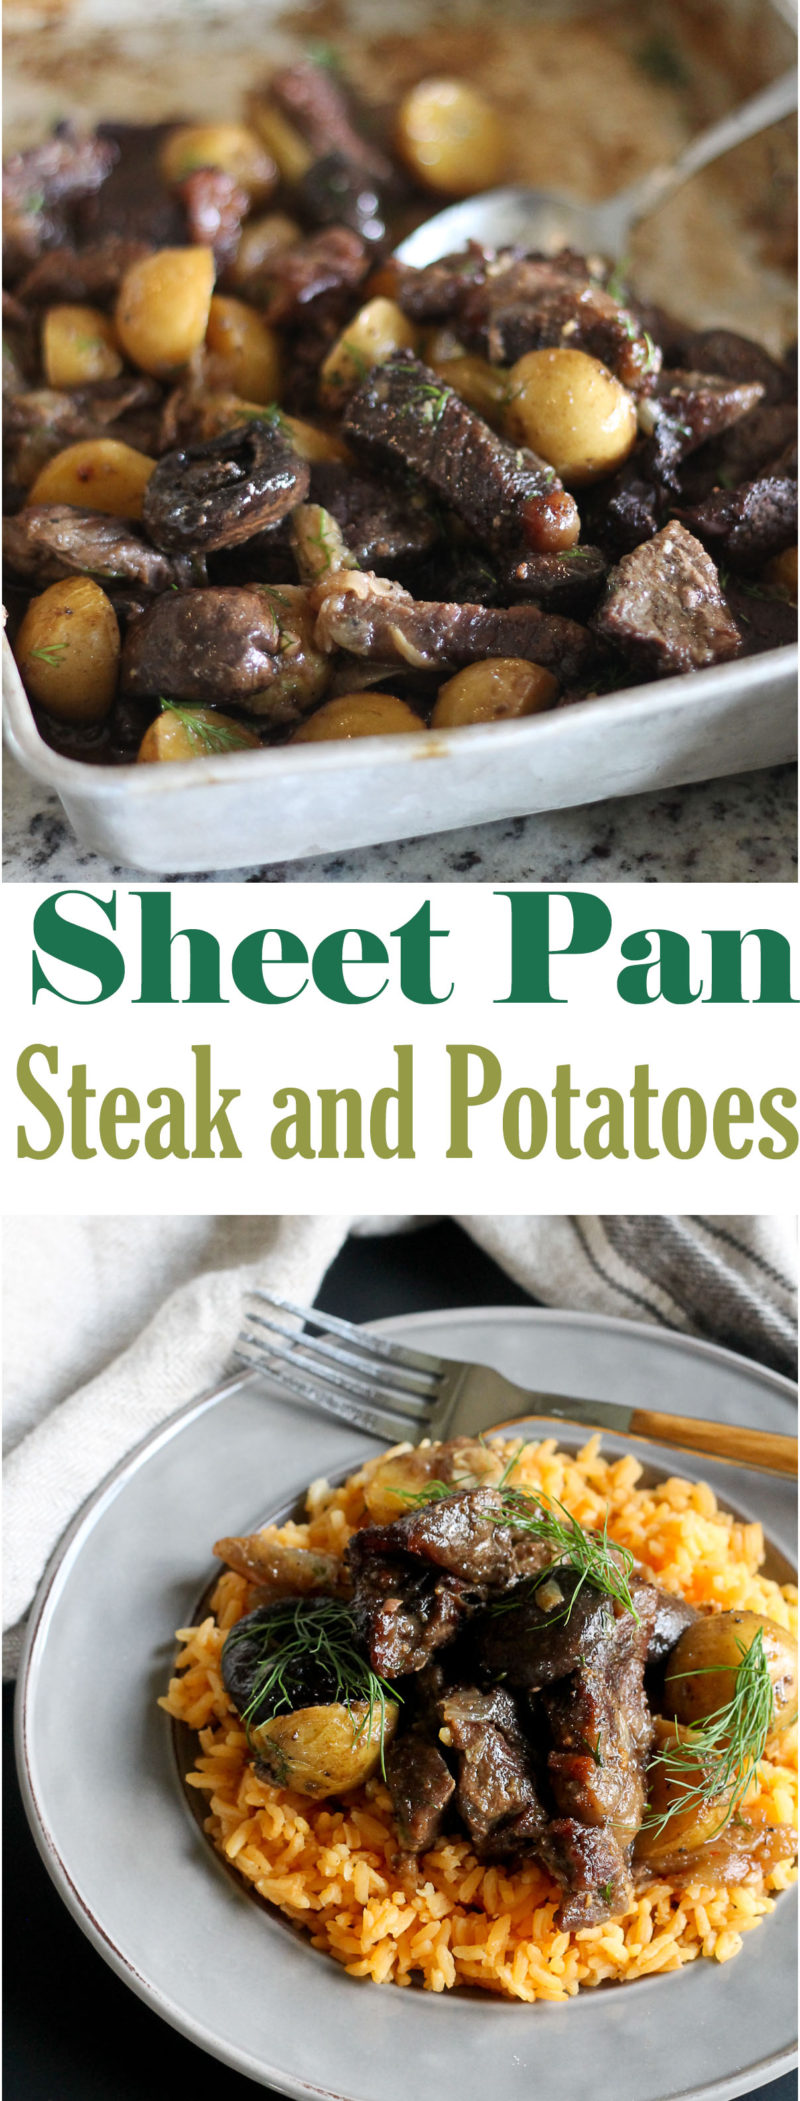 Sheet Pan Steak and Potatoes